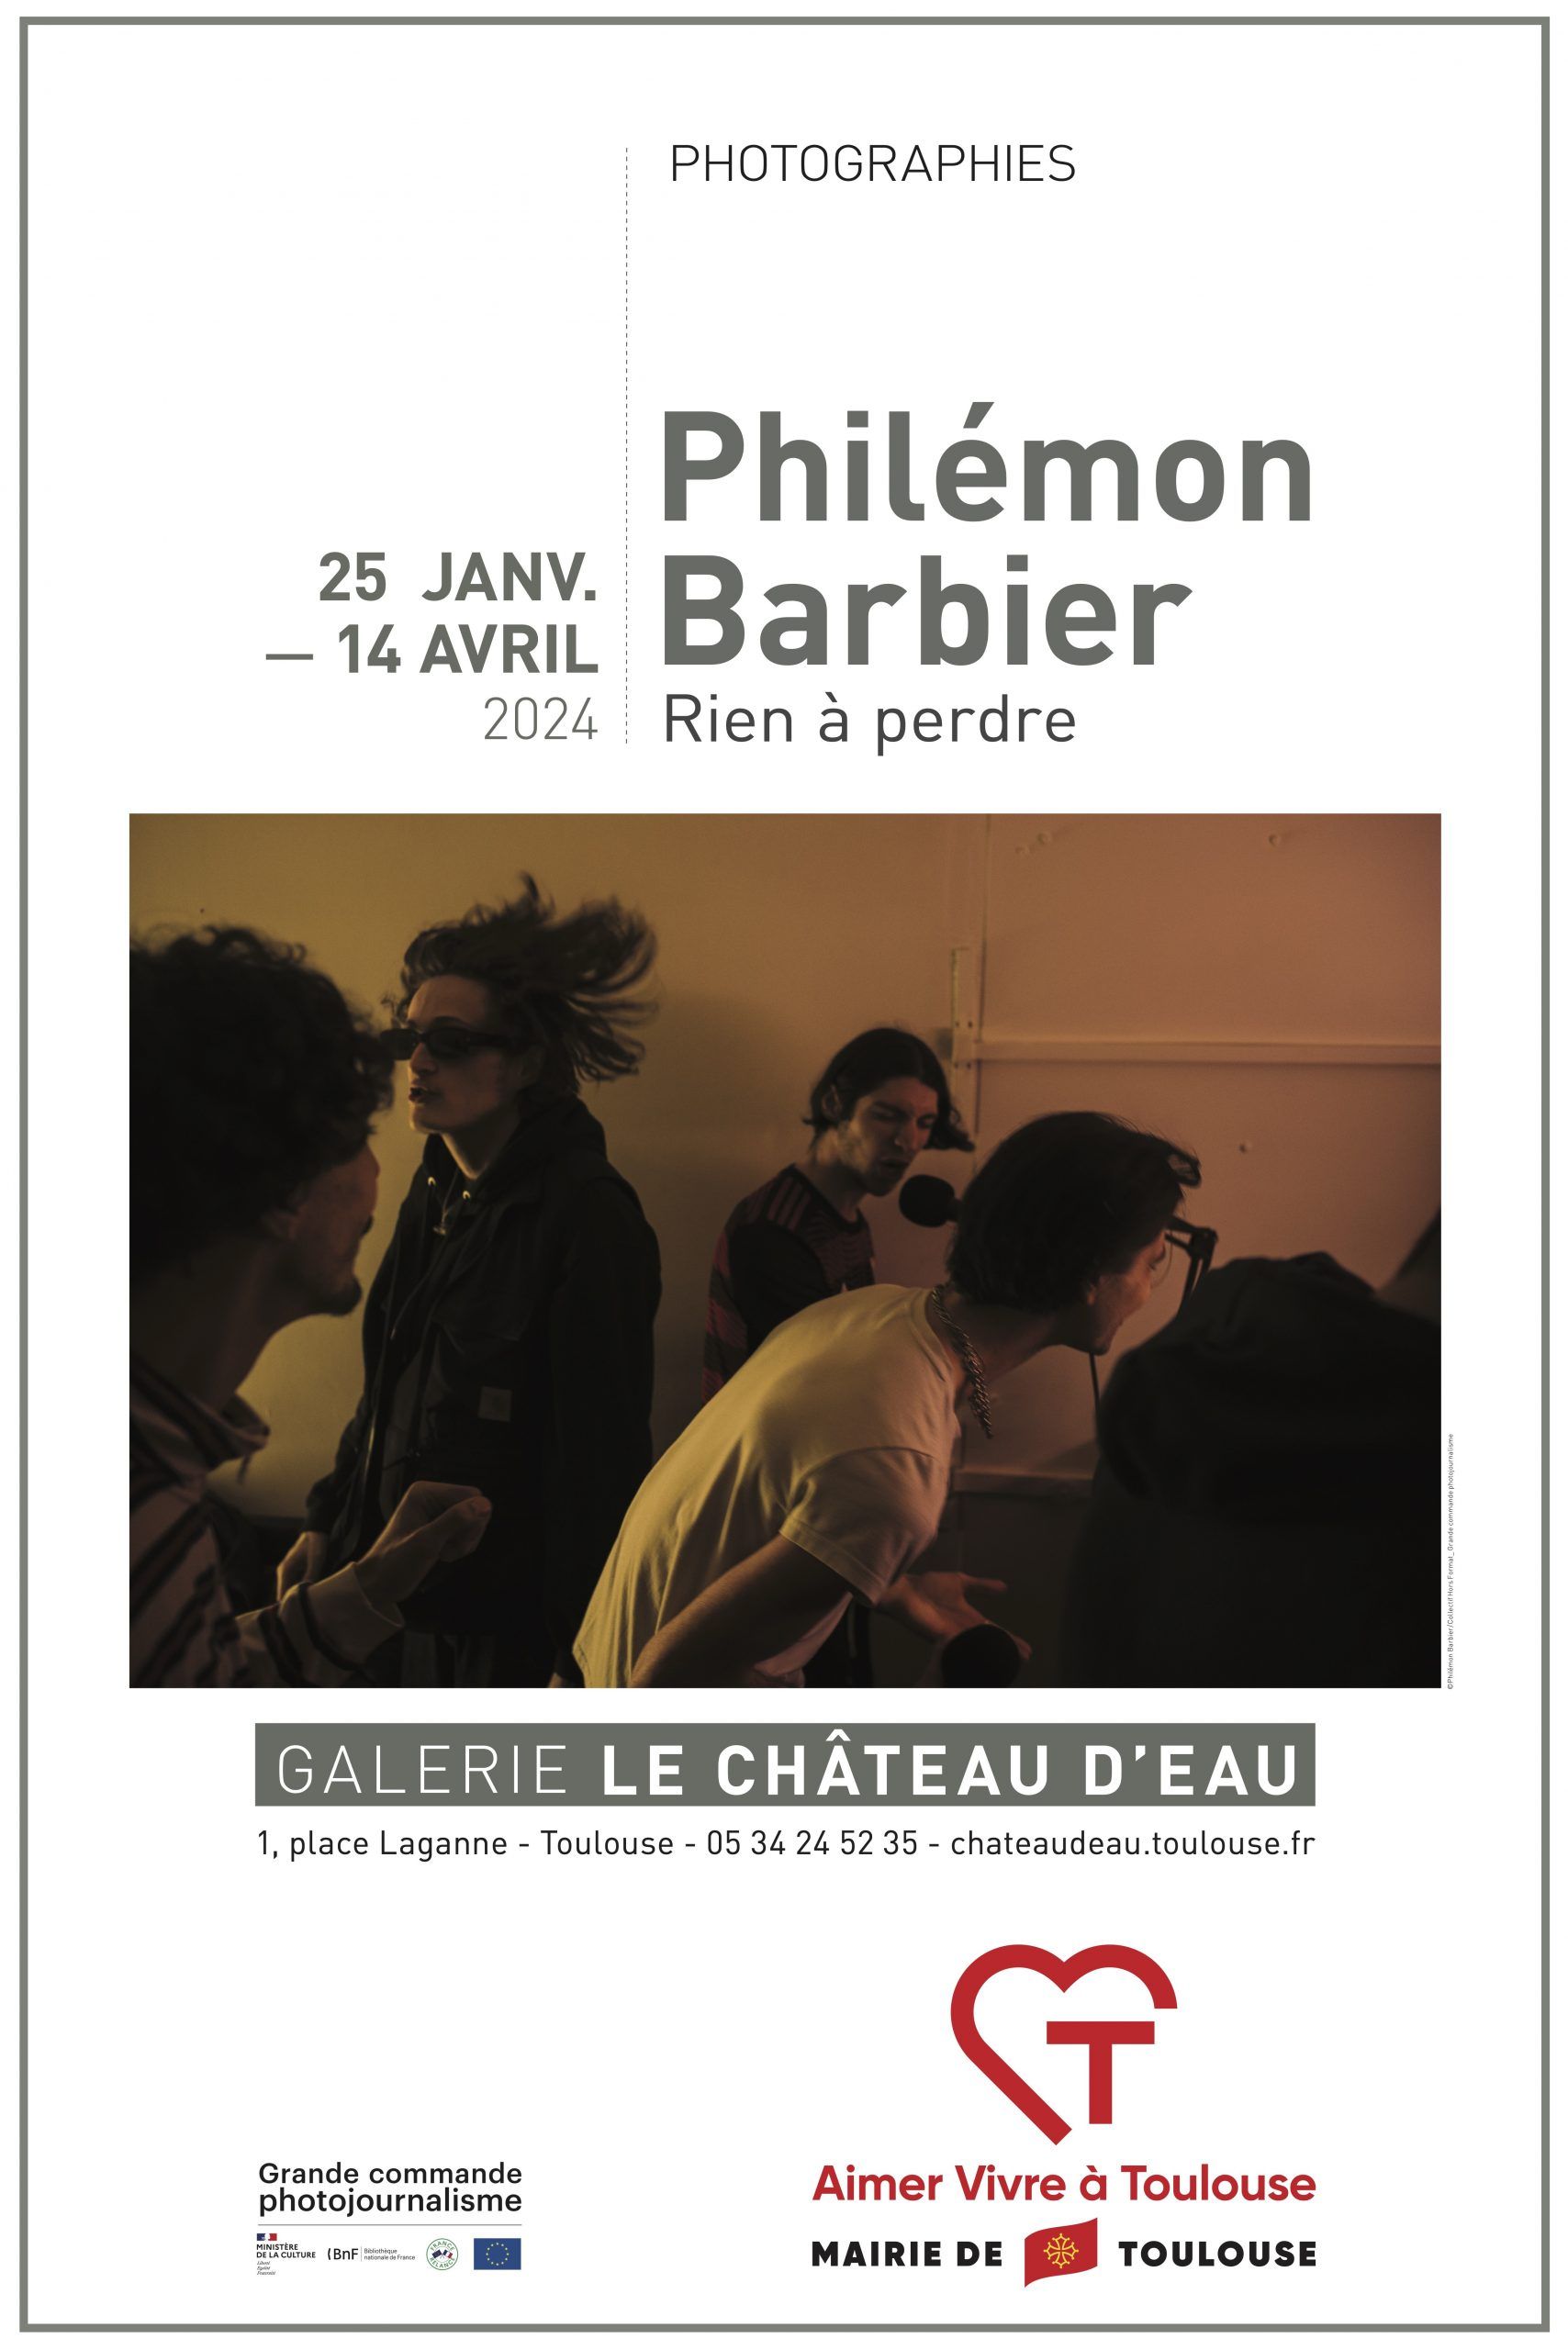 Galerie Le Château d'Eau - Philémon Barbier